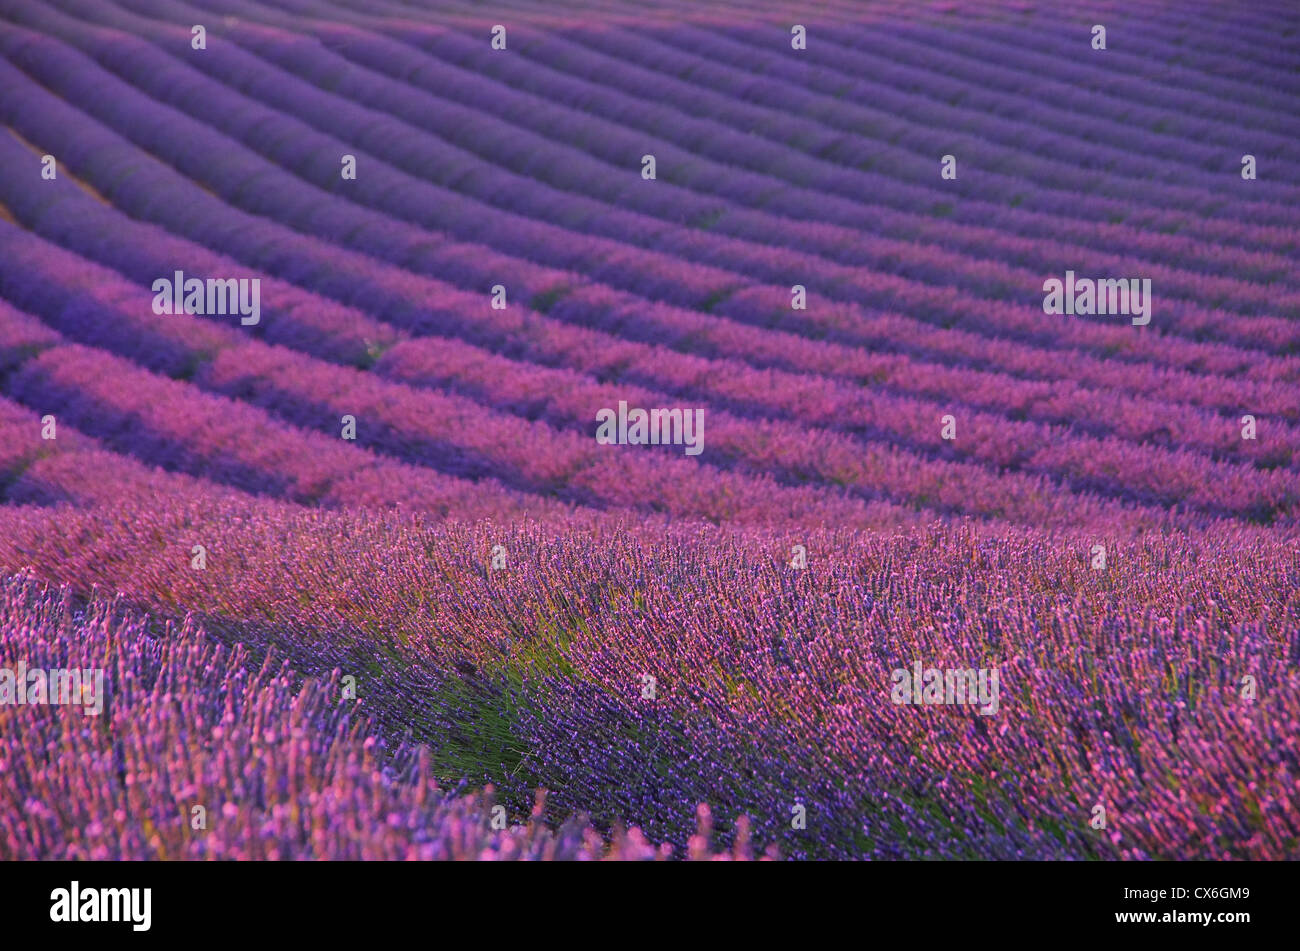 Lavendelfeld - lavender field 04 Stock Photo